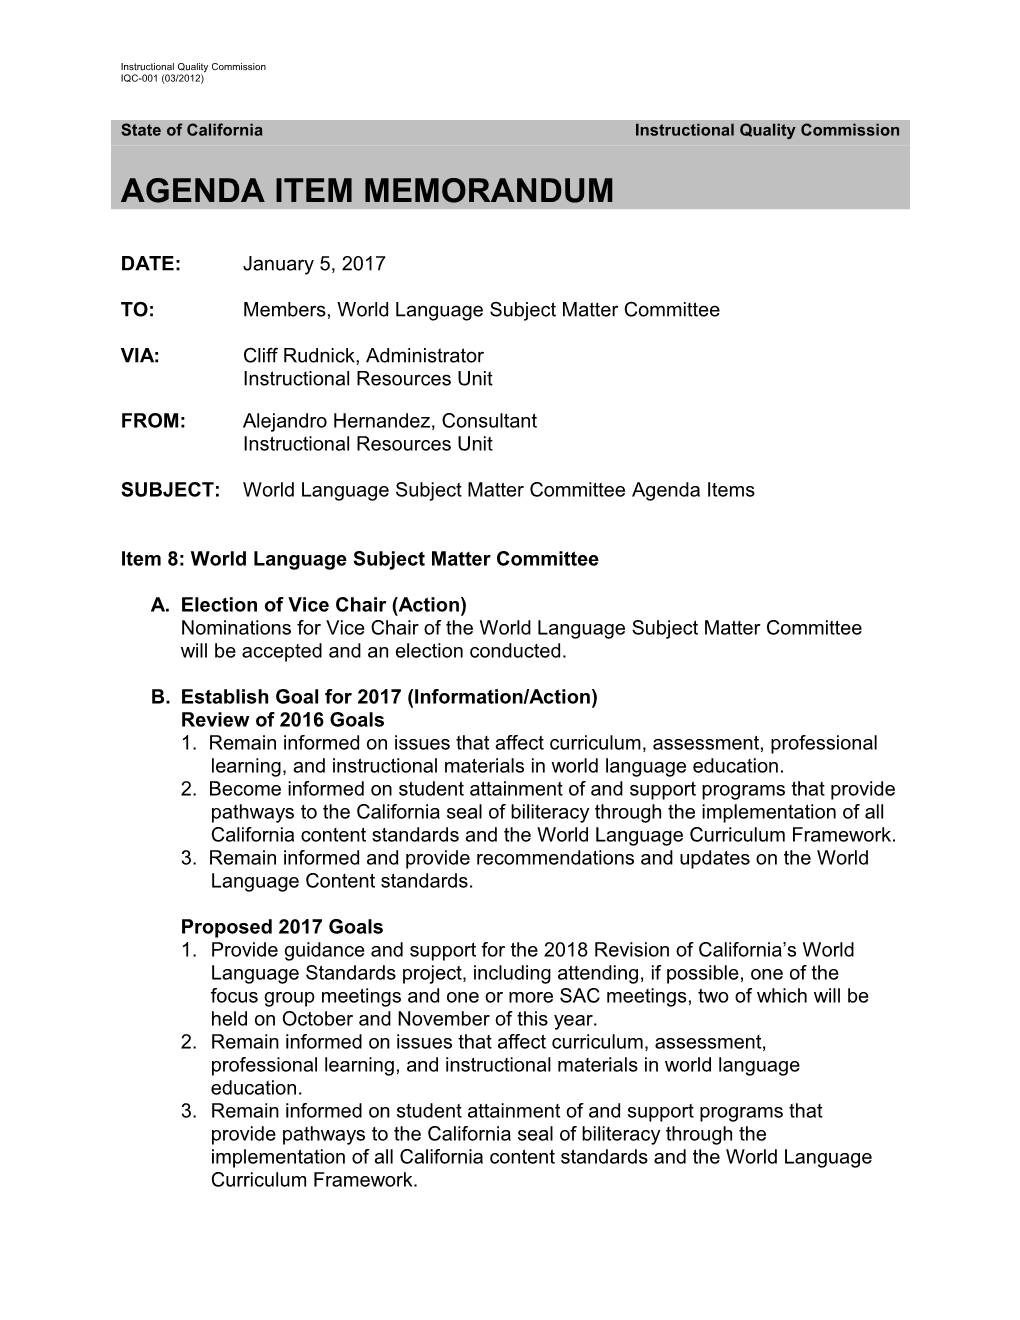 World Language SMC Agenda Items 2017 - Instructional Quality Commission (CA Dept of Education)